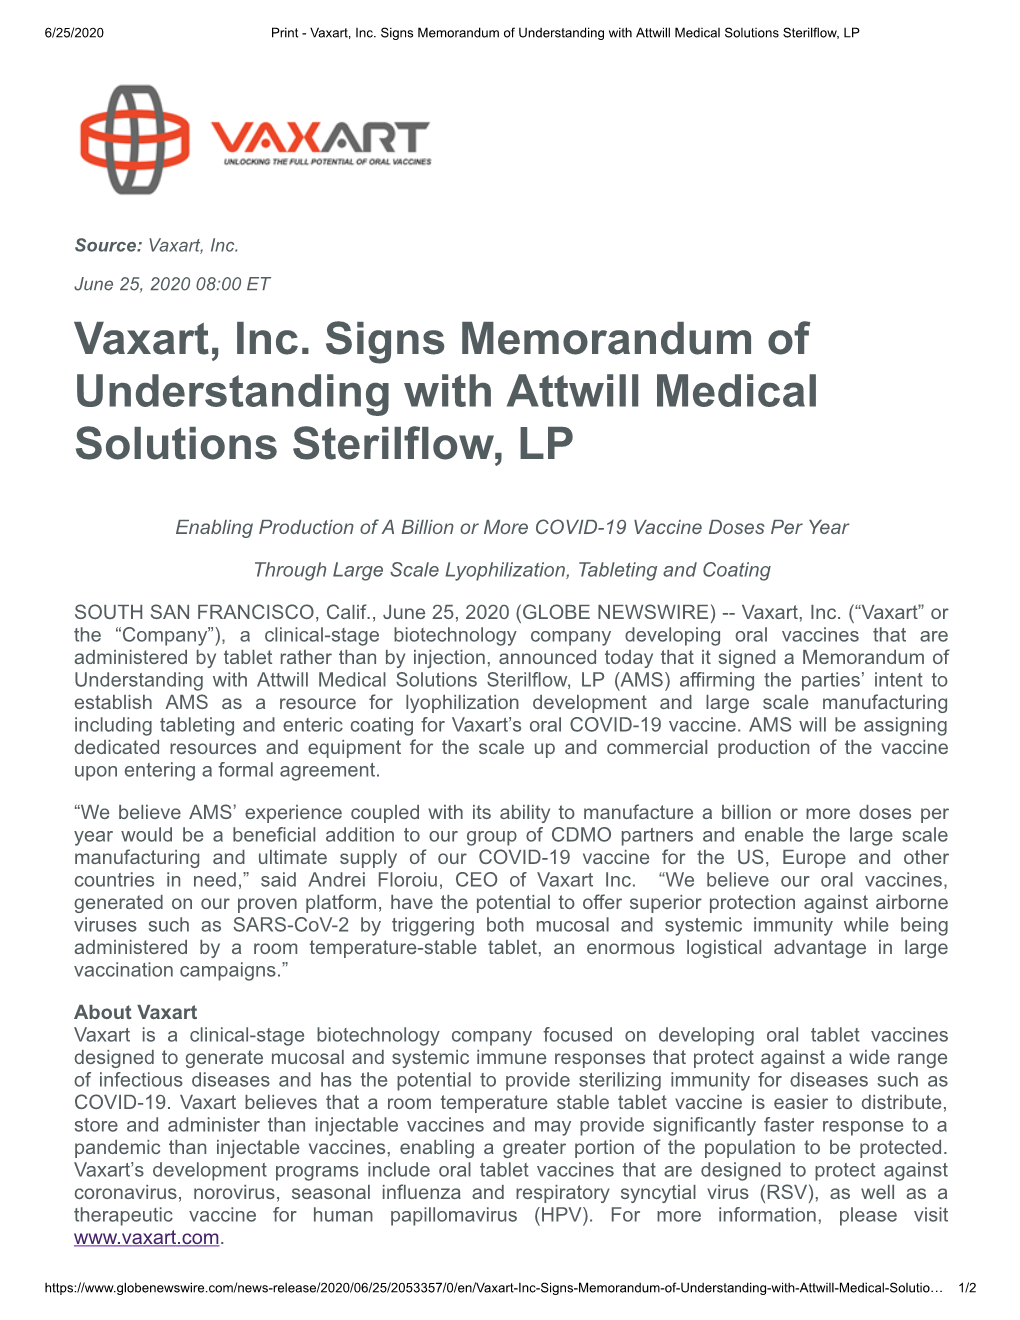 Vaxart, Inc. Signs Memorandum of Understanding with Attwill Medical Solutions Sterilflow, LP